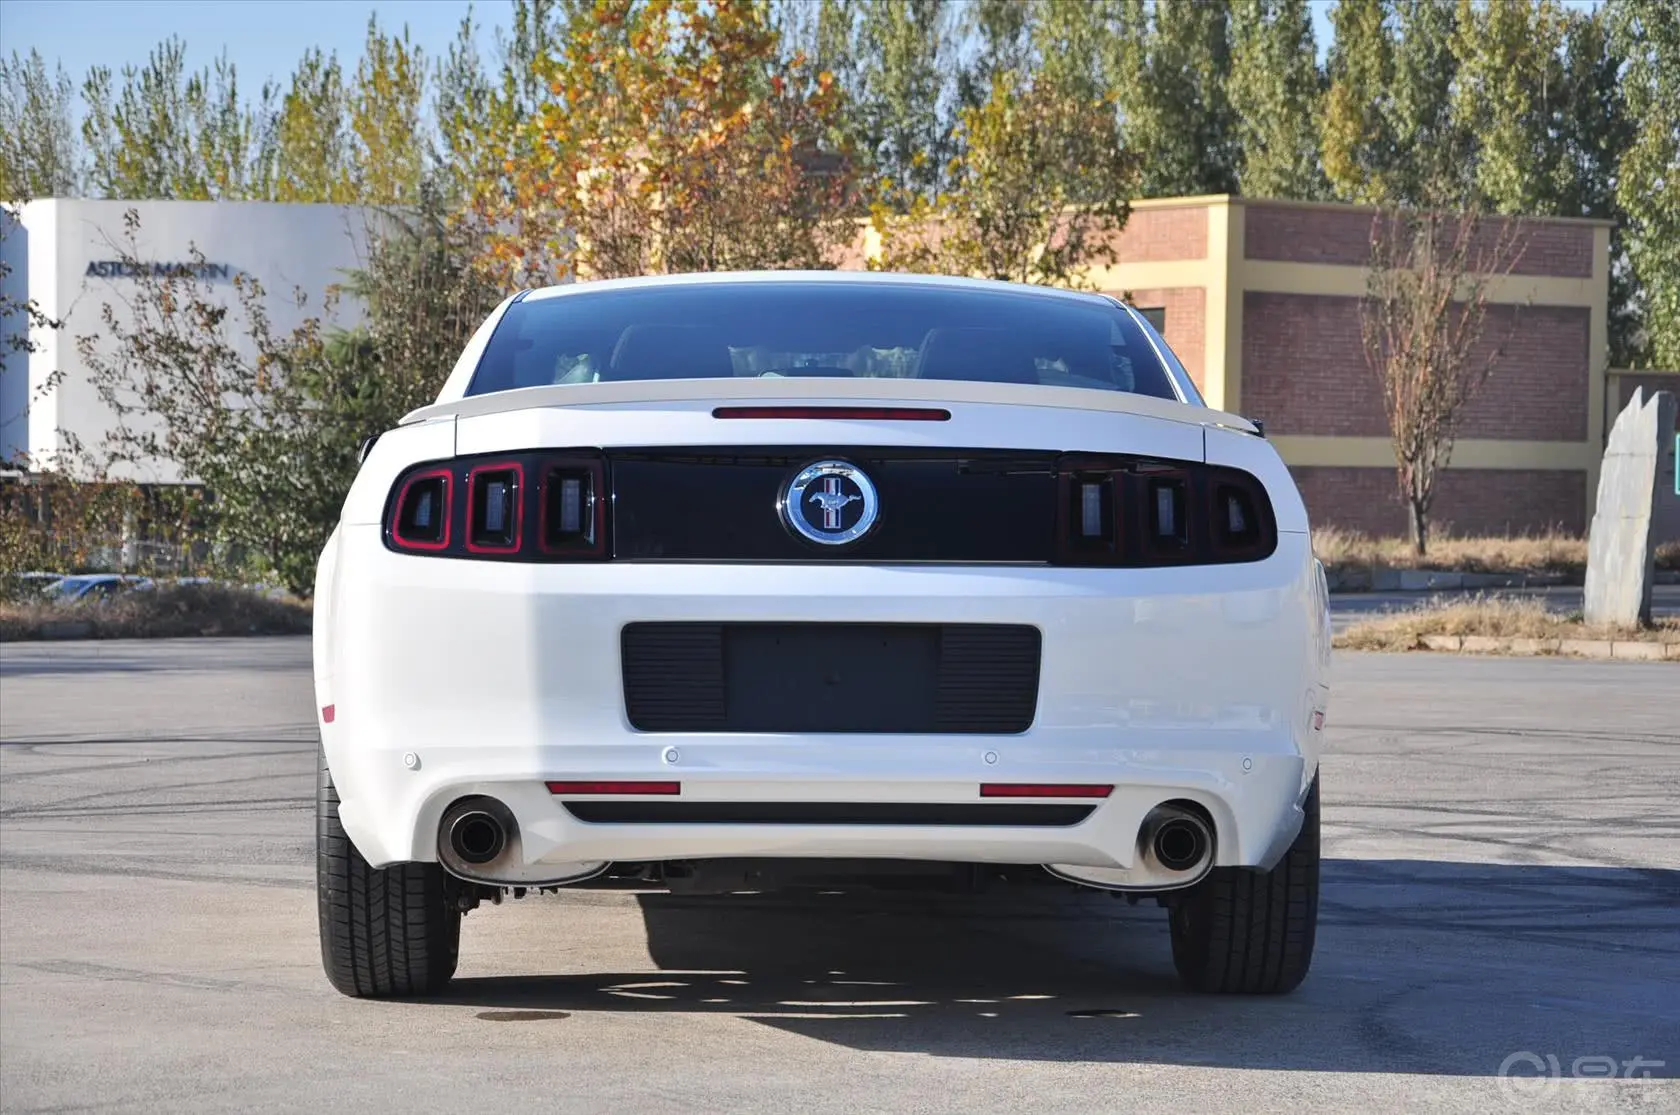 MustangV6 3.7L 自动  豪华版 标配外观